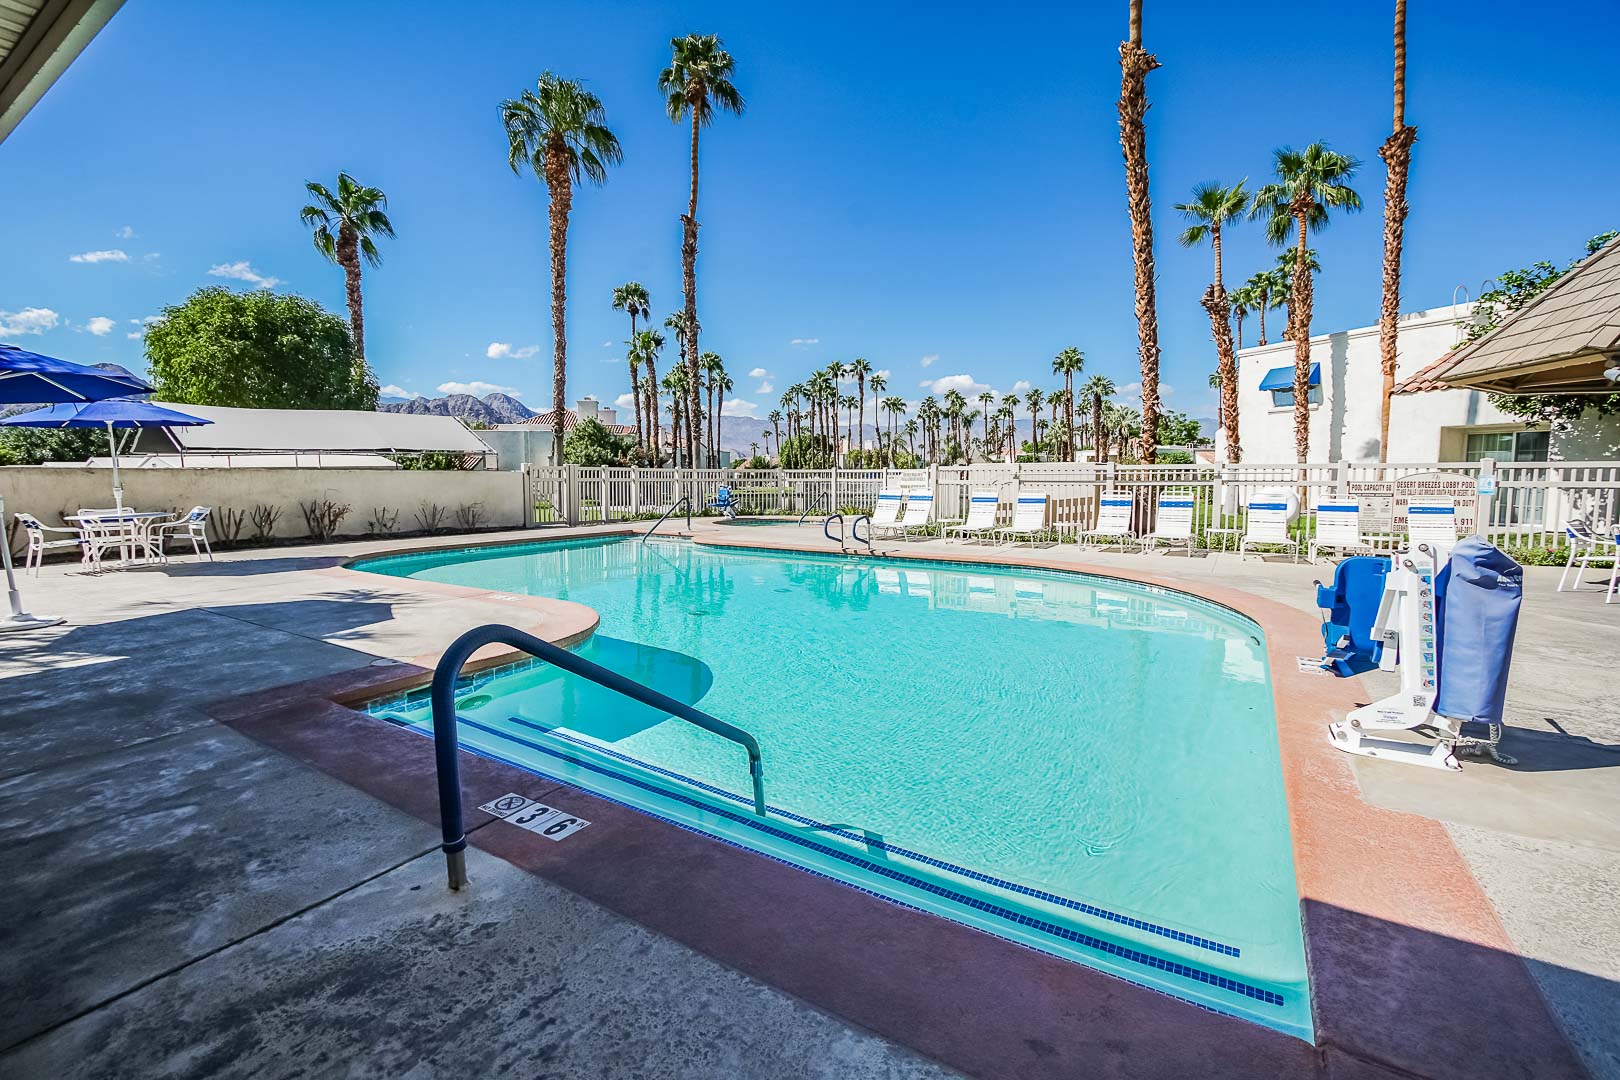 A refreshing pool at VRI Americas' Desert Breezes Resort in California